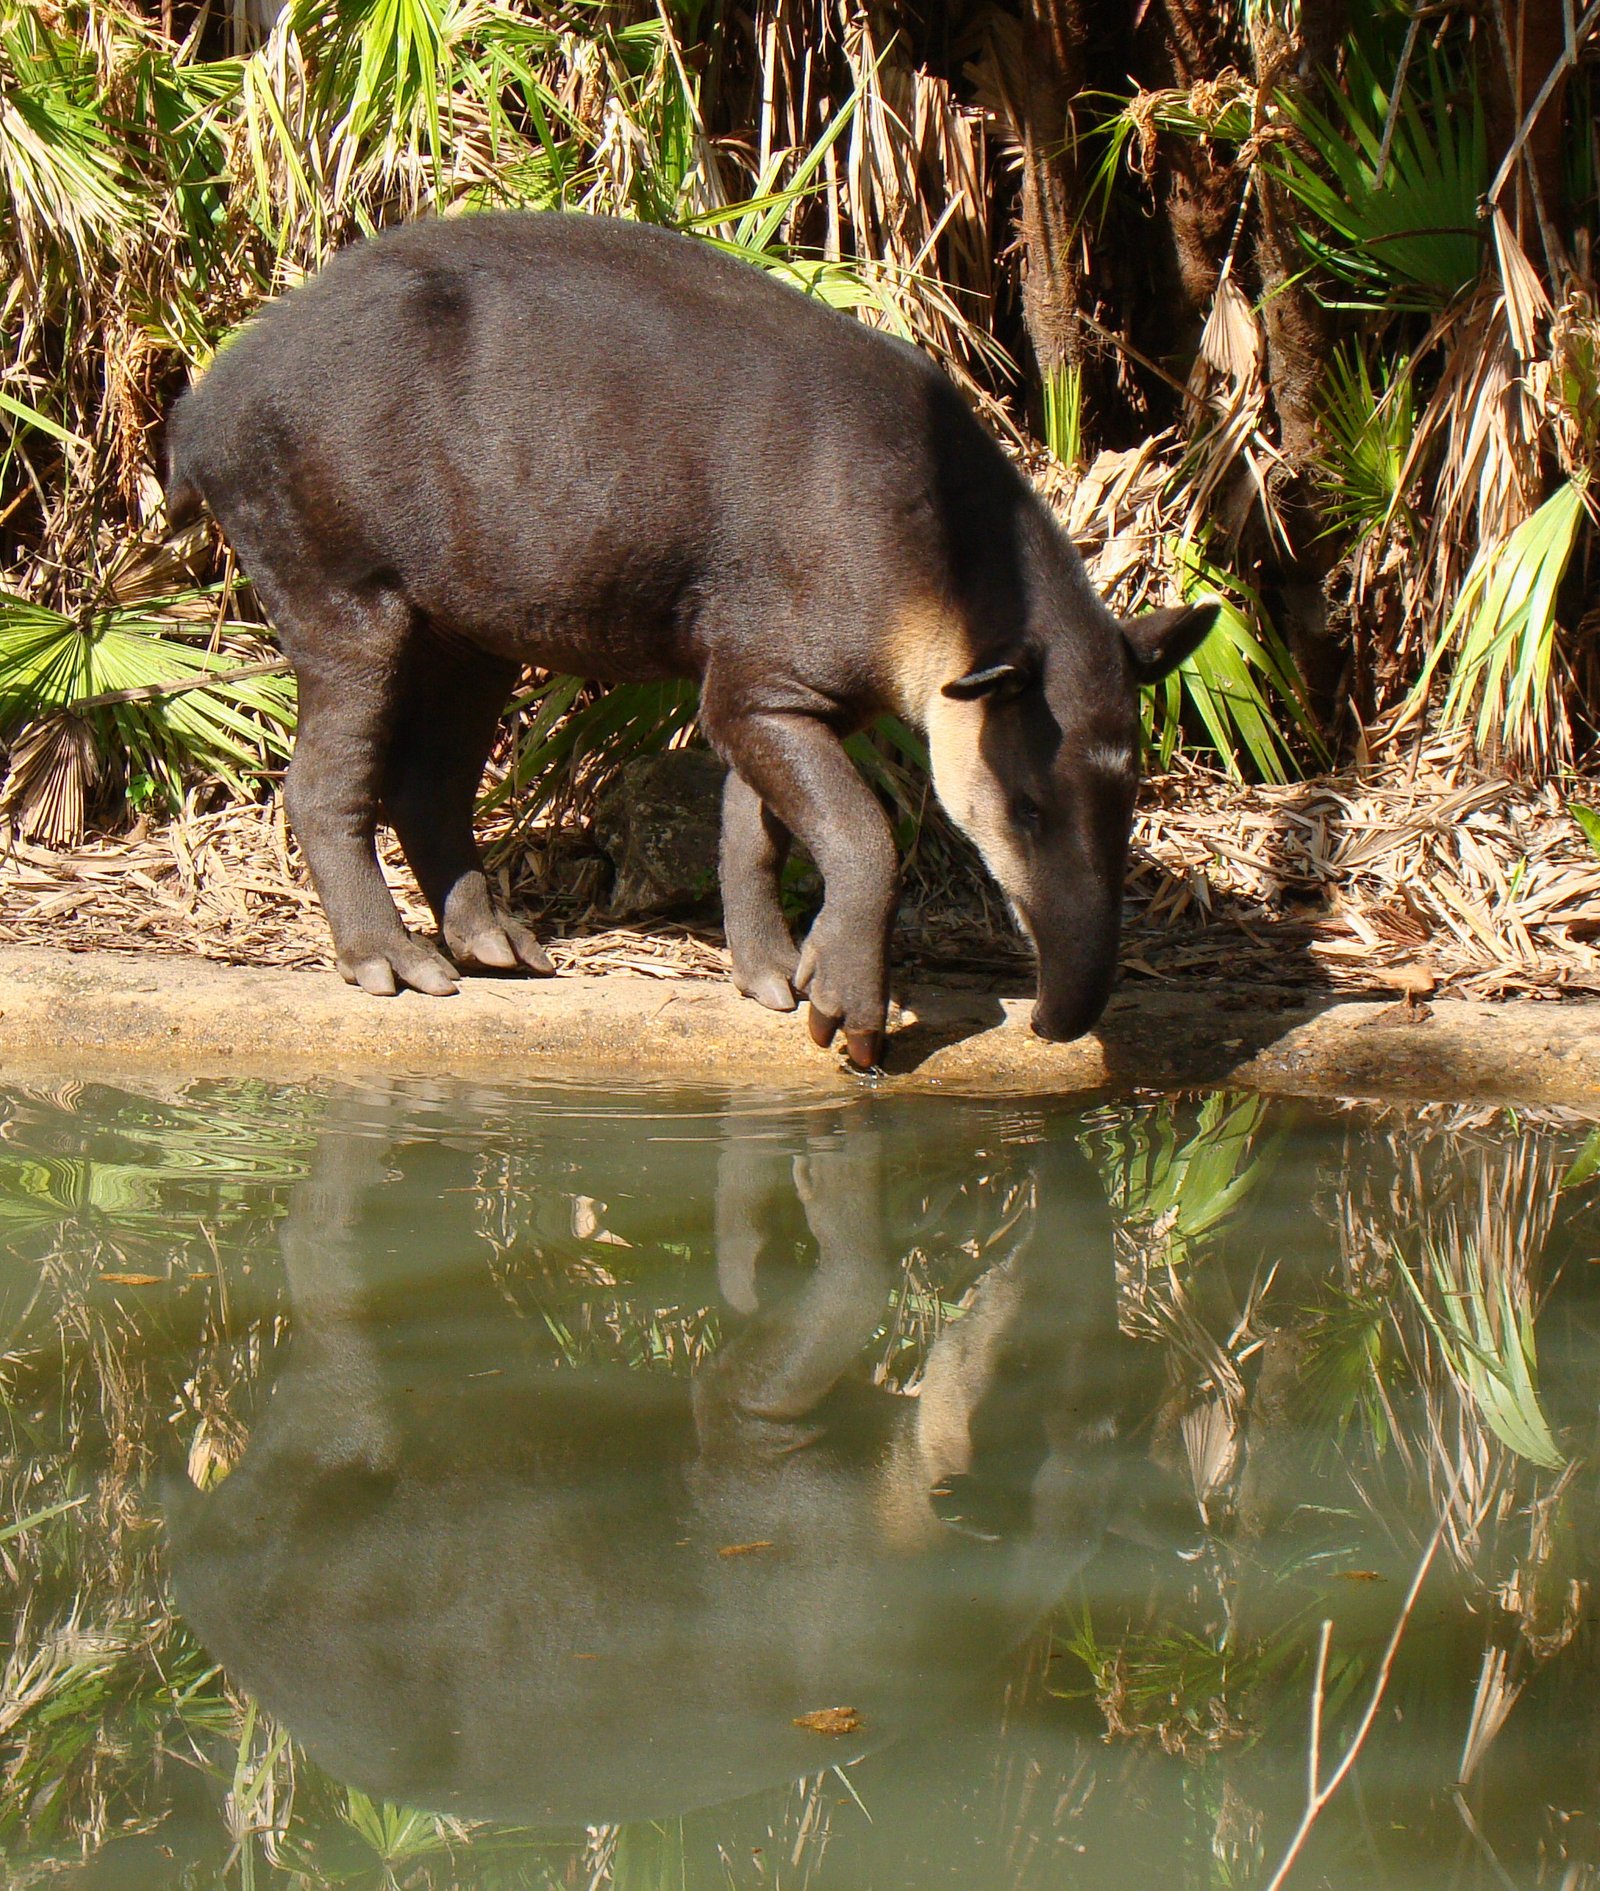 The Belize zoo tapir